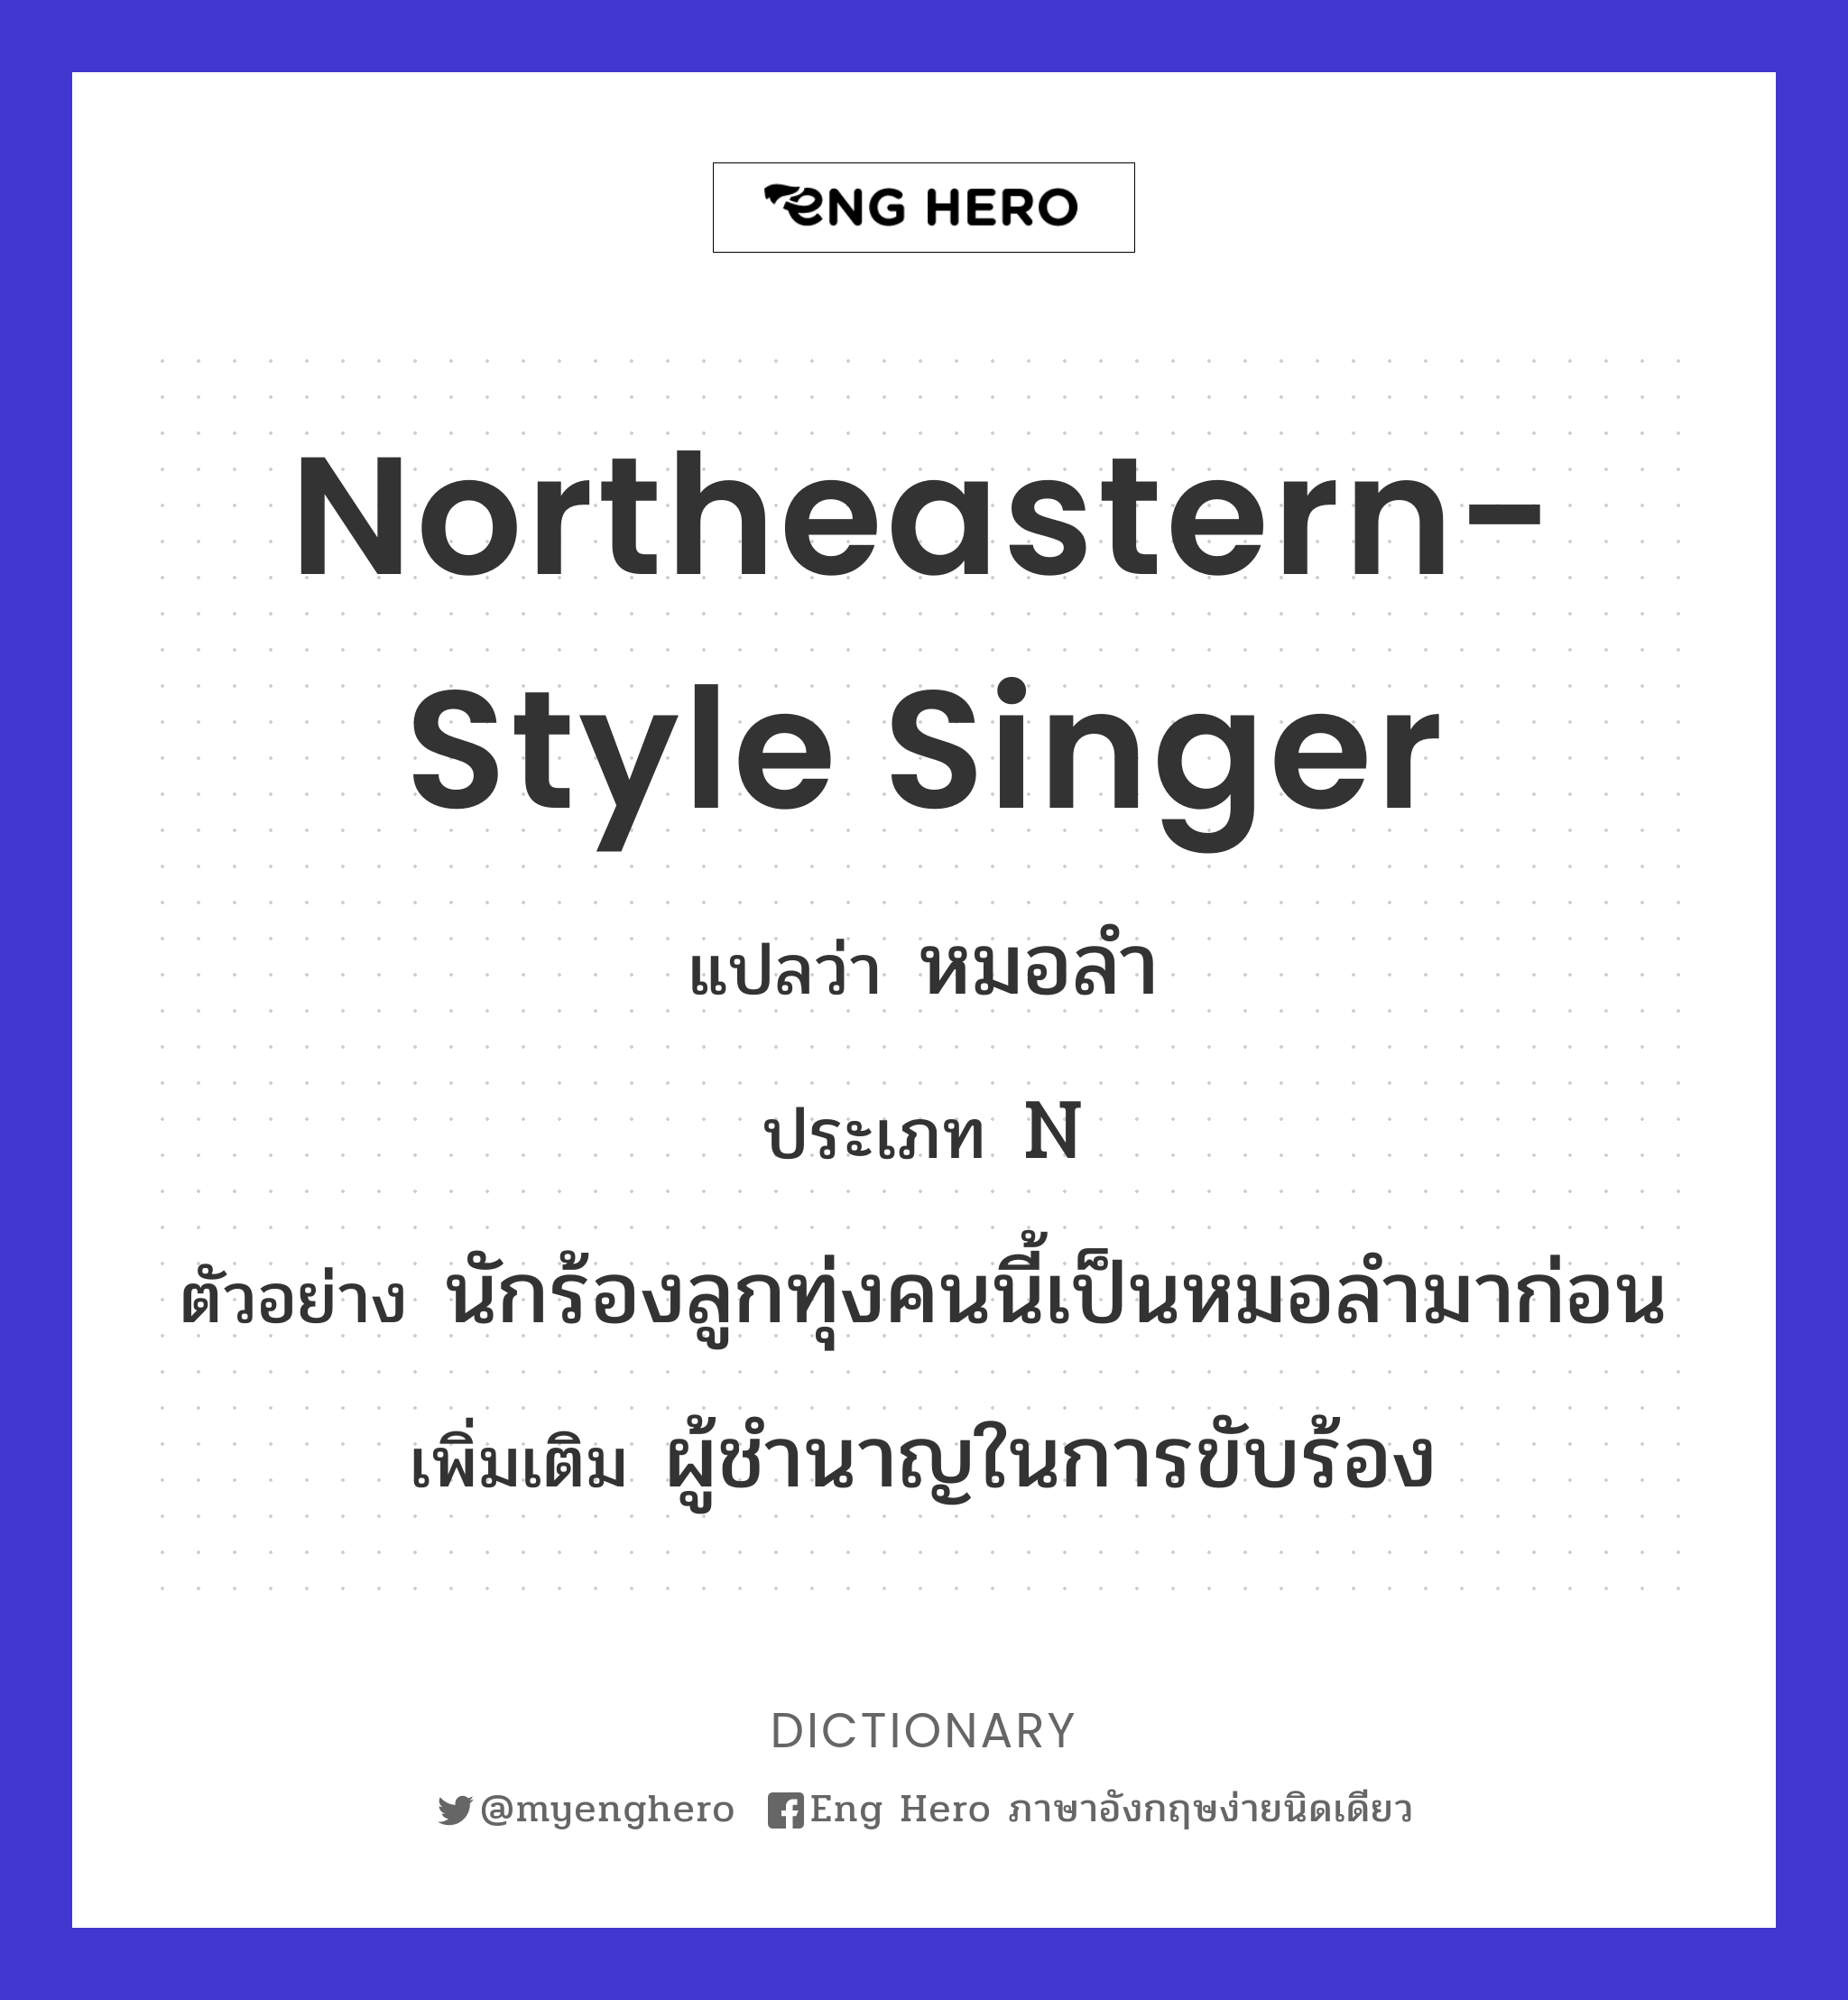 northeastern-style singer